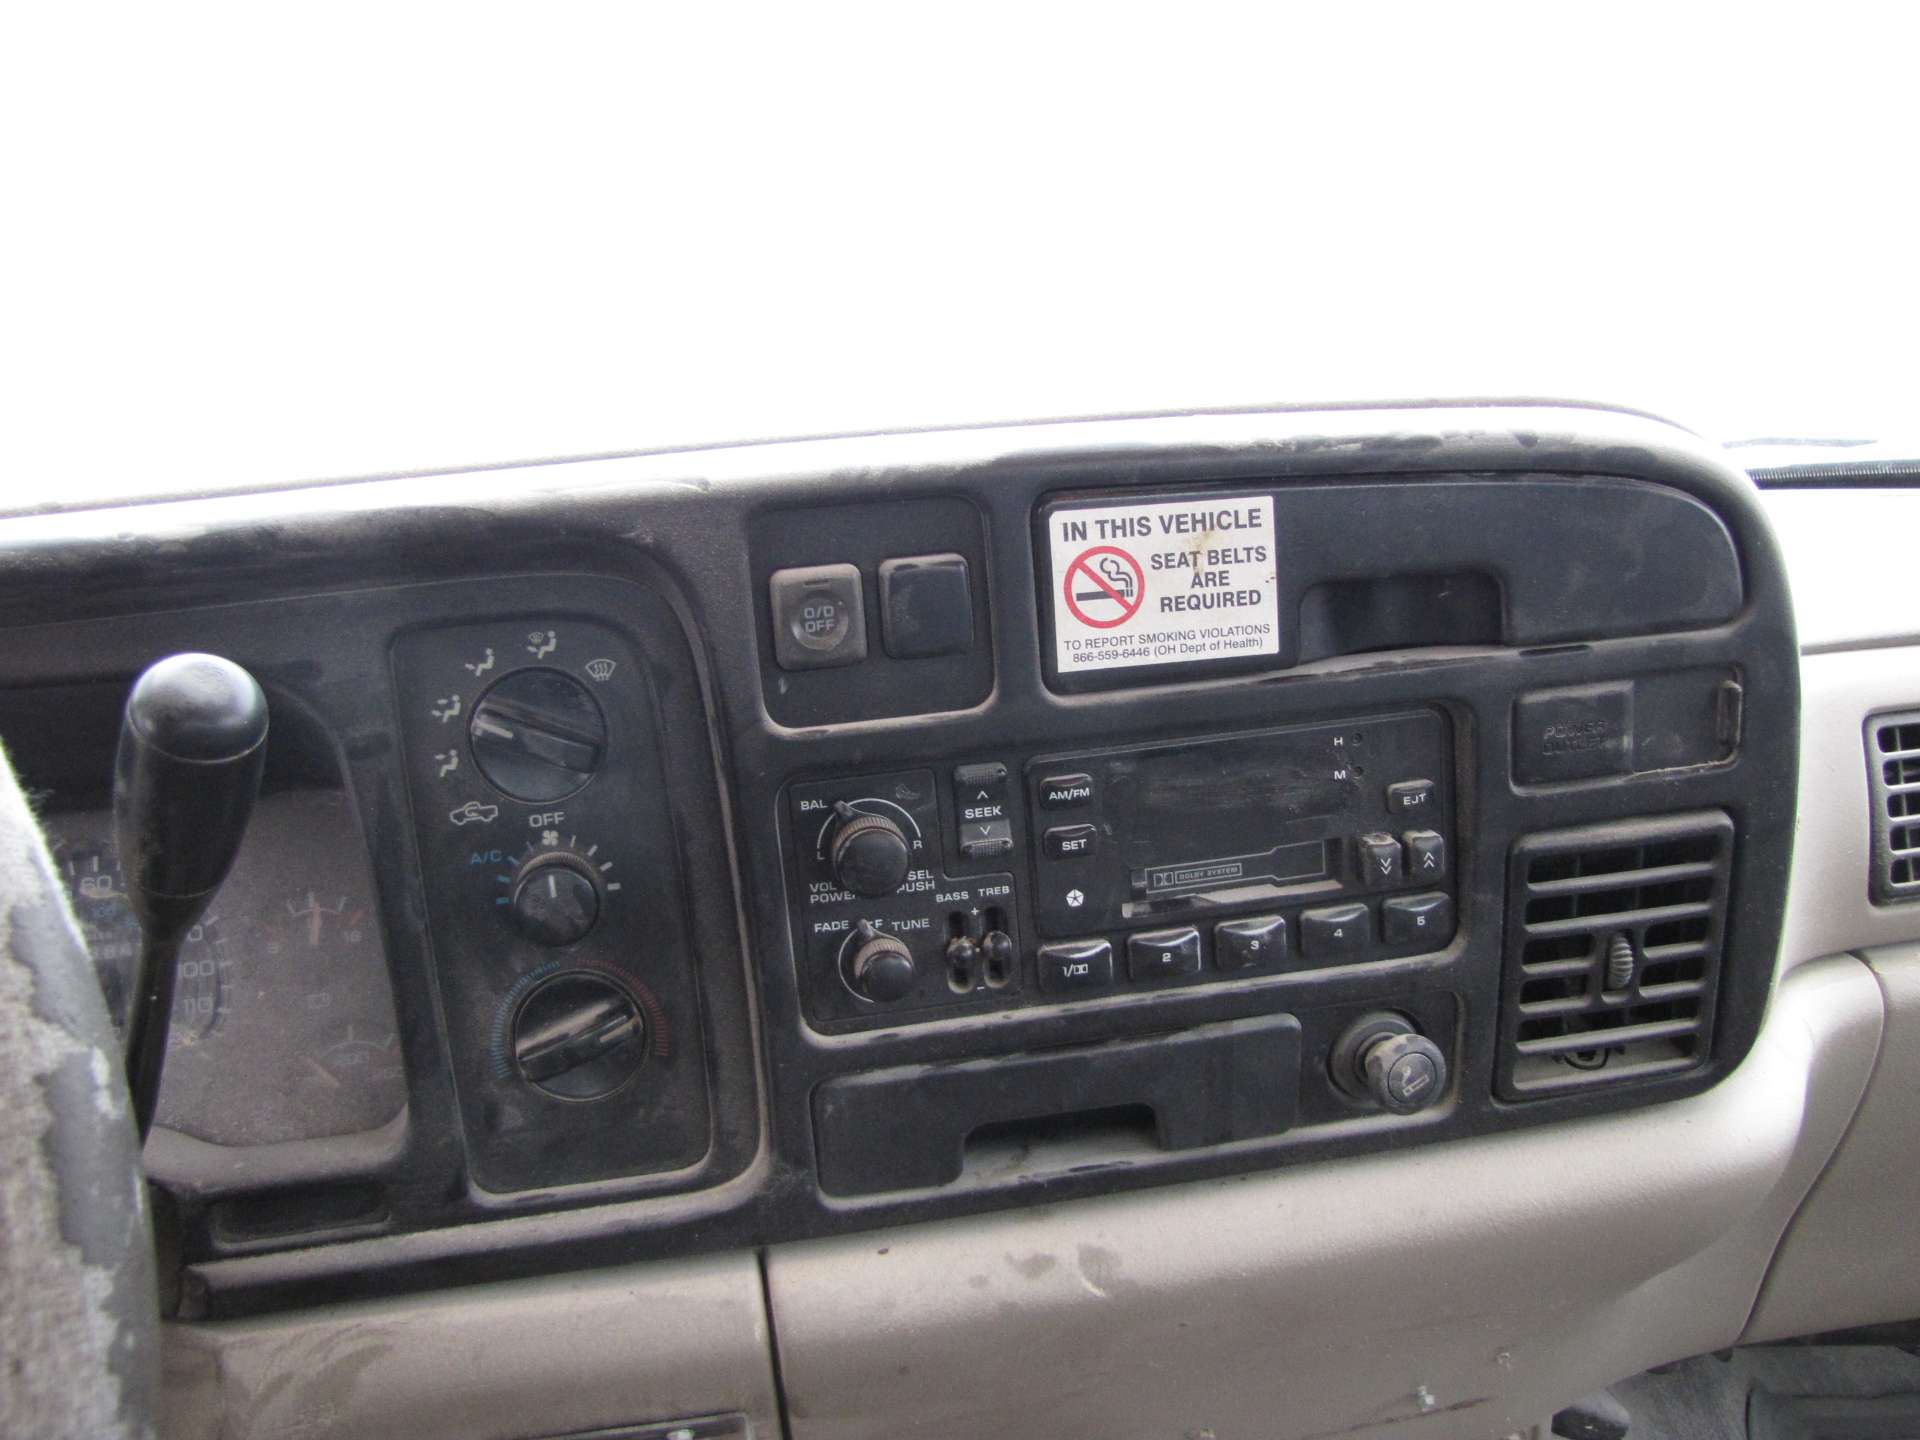 1996 Dodge Ram 2500 Laramie SLT pickup truck - Image 56 of 80